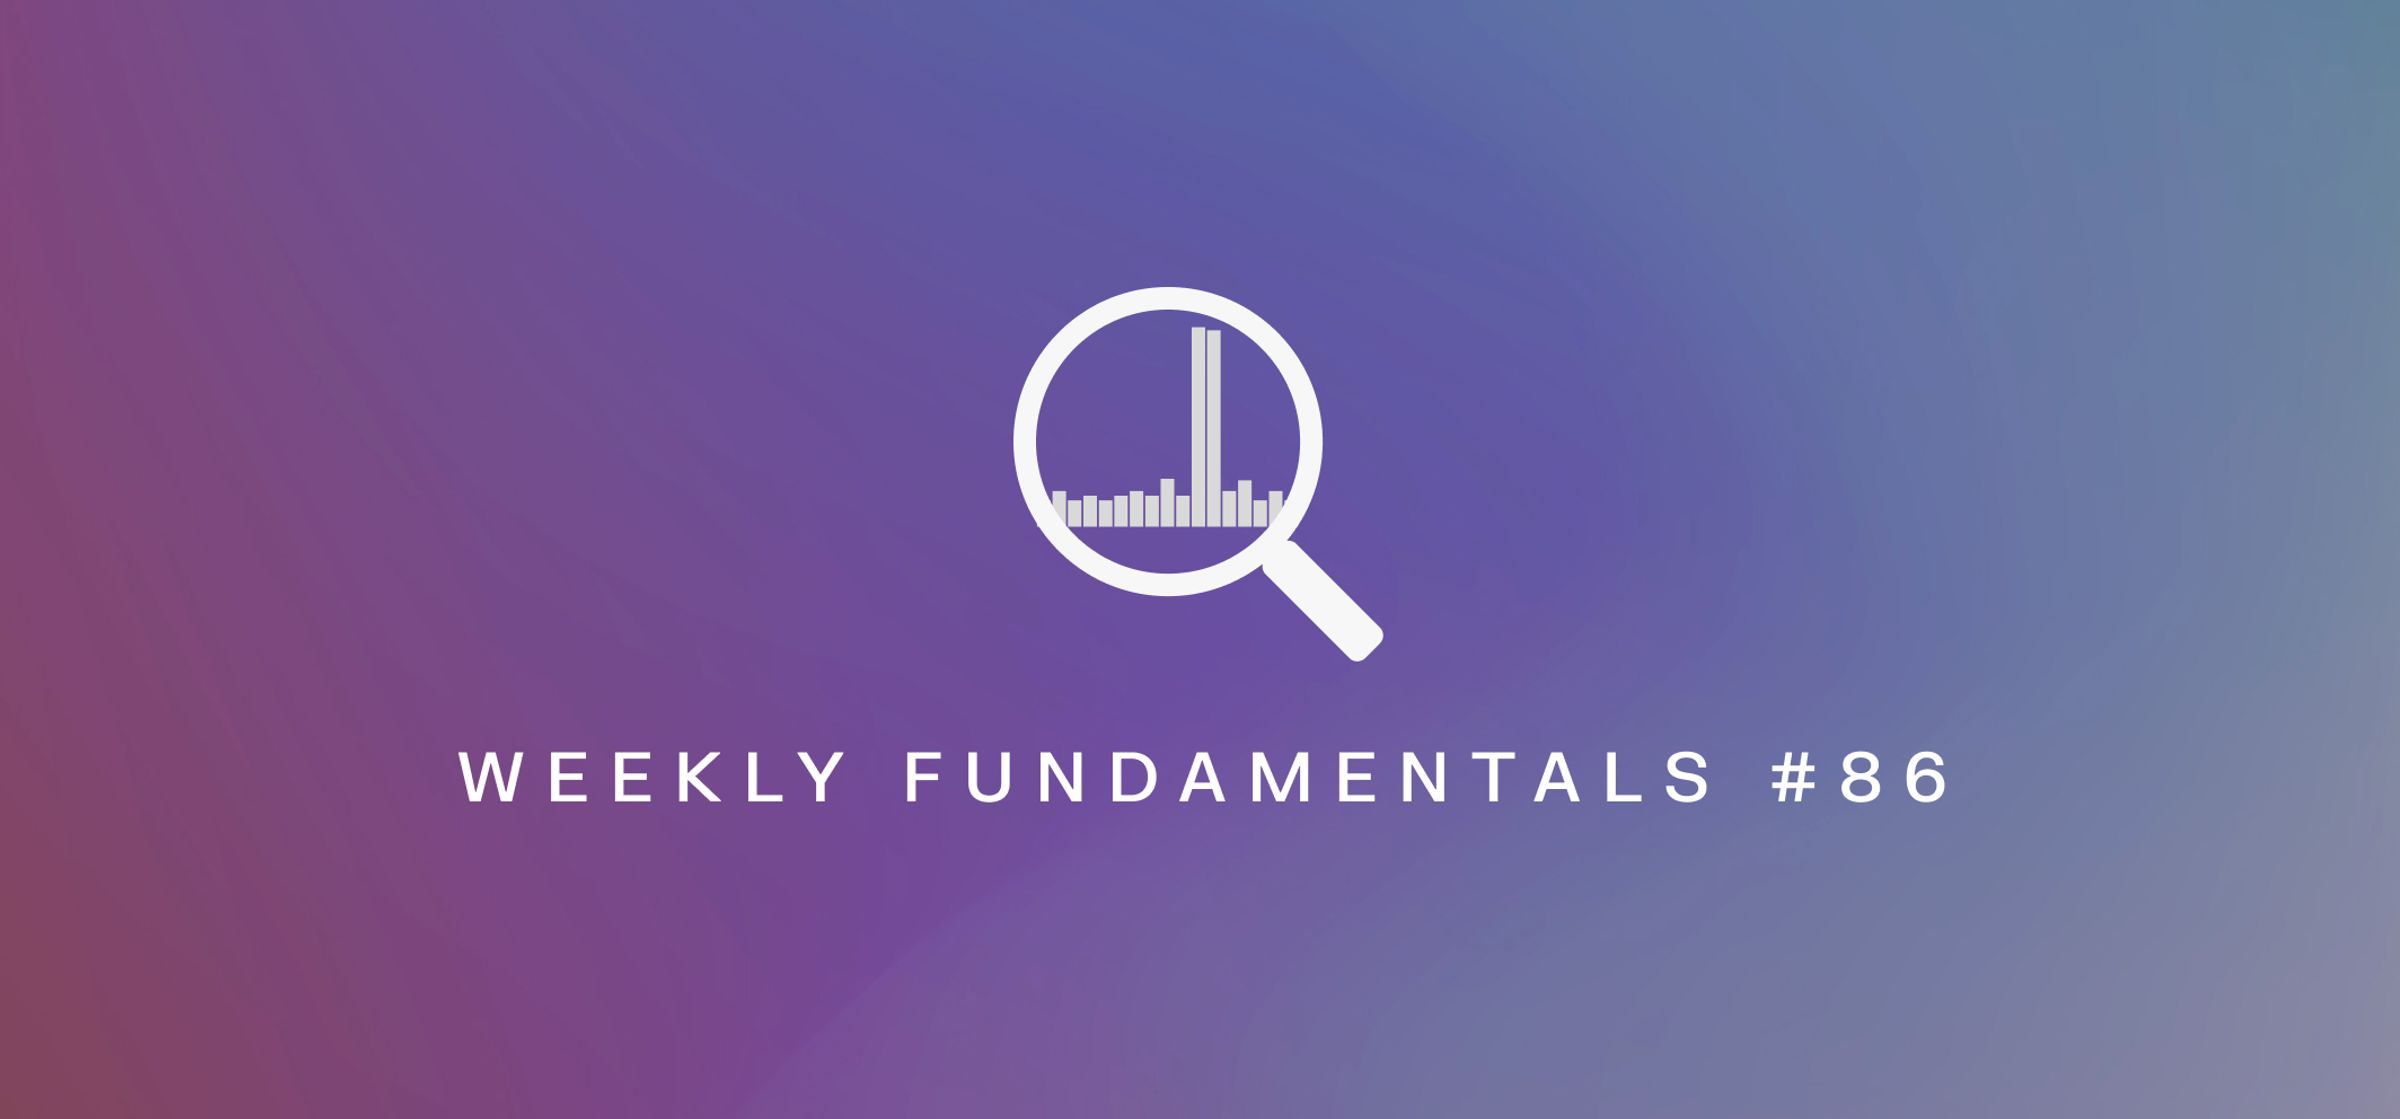 Weekly fundamentals – Blockchains (L2)